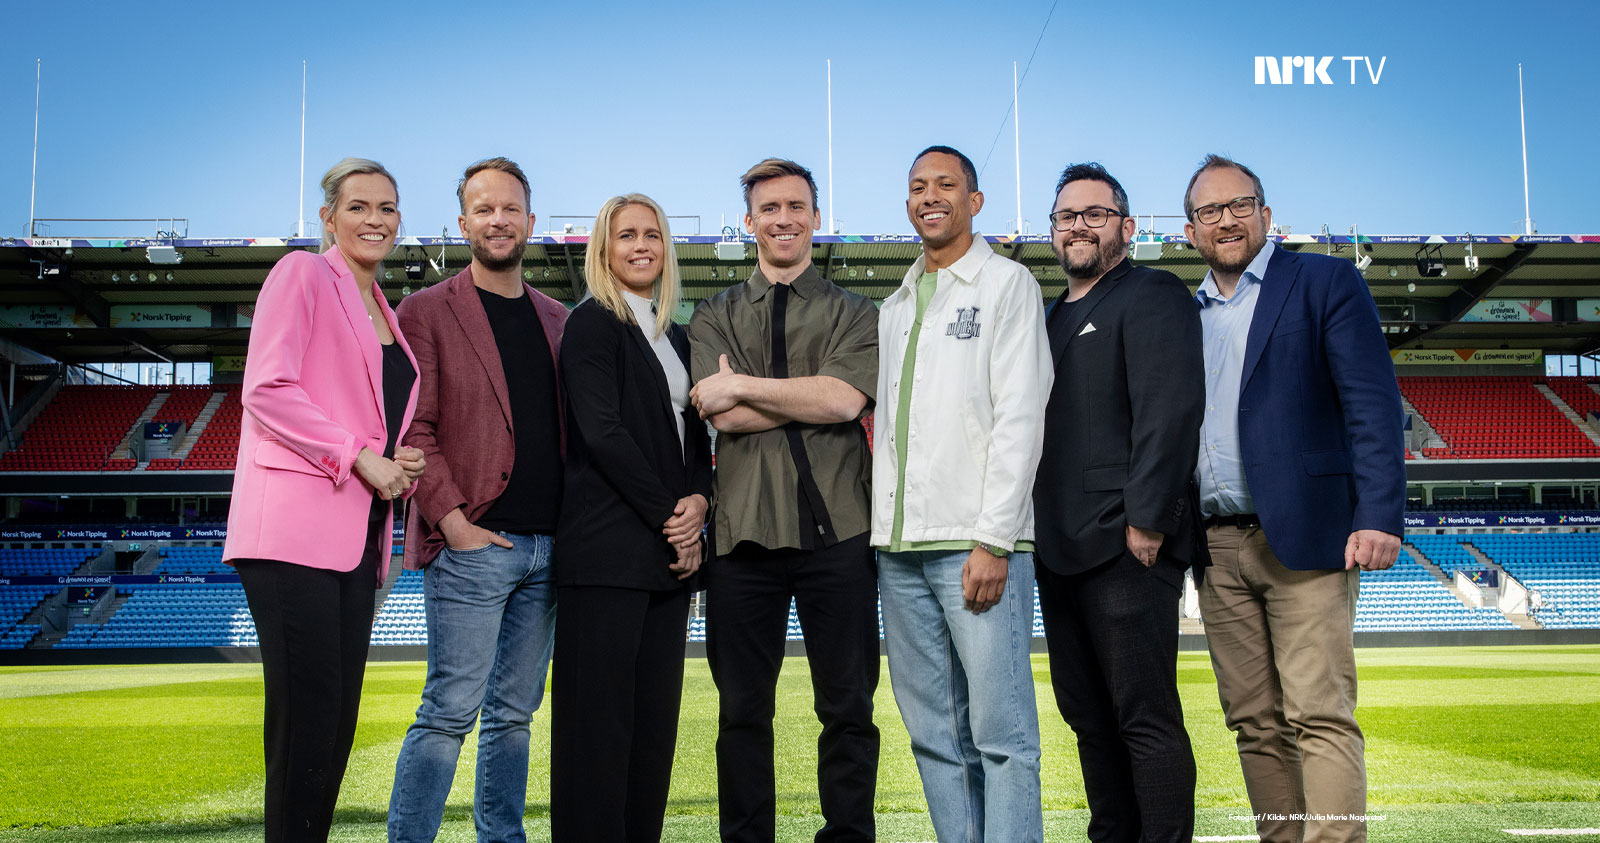 NRKs team: Carina Olset, Andreas Hagen, Elise Thorsnes, Carl-Erik Torp, Tete Lidbom, Patrick Rowlands og Andreas Stabrun Smith.